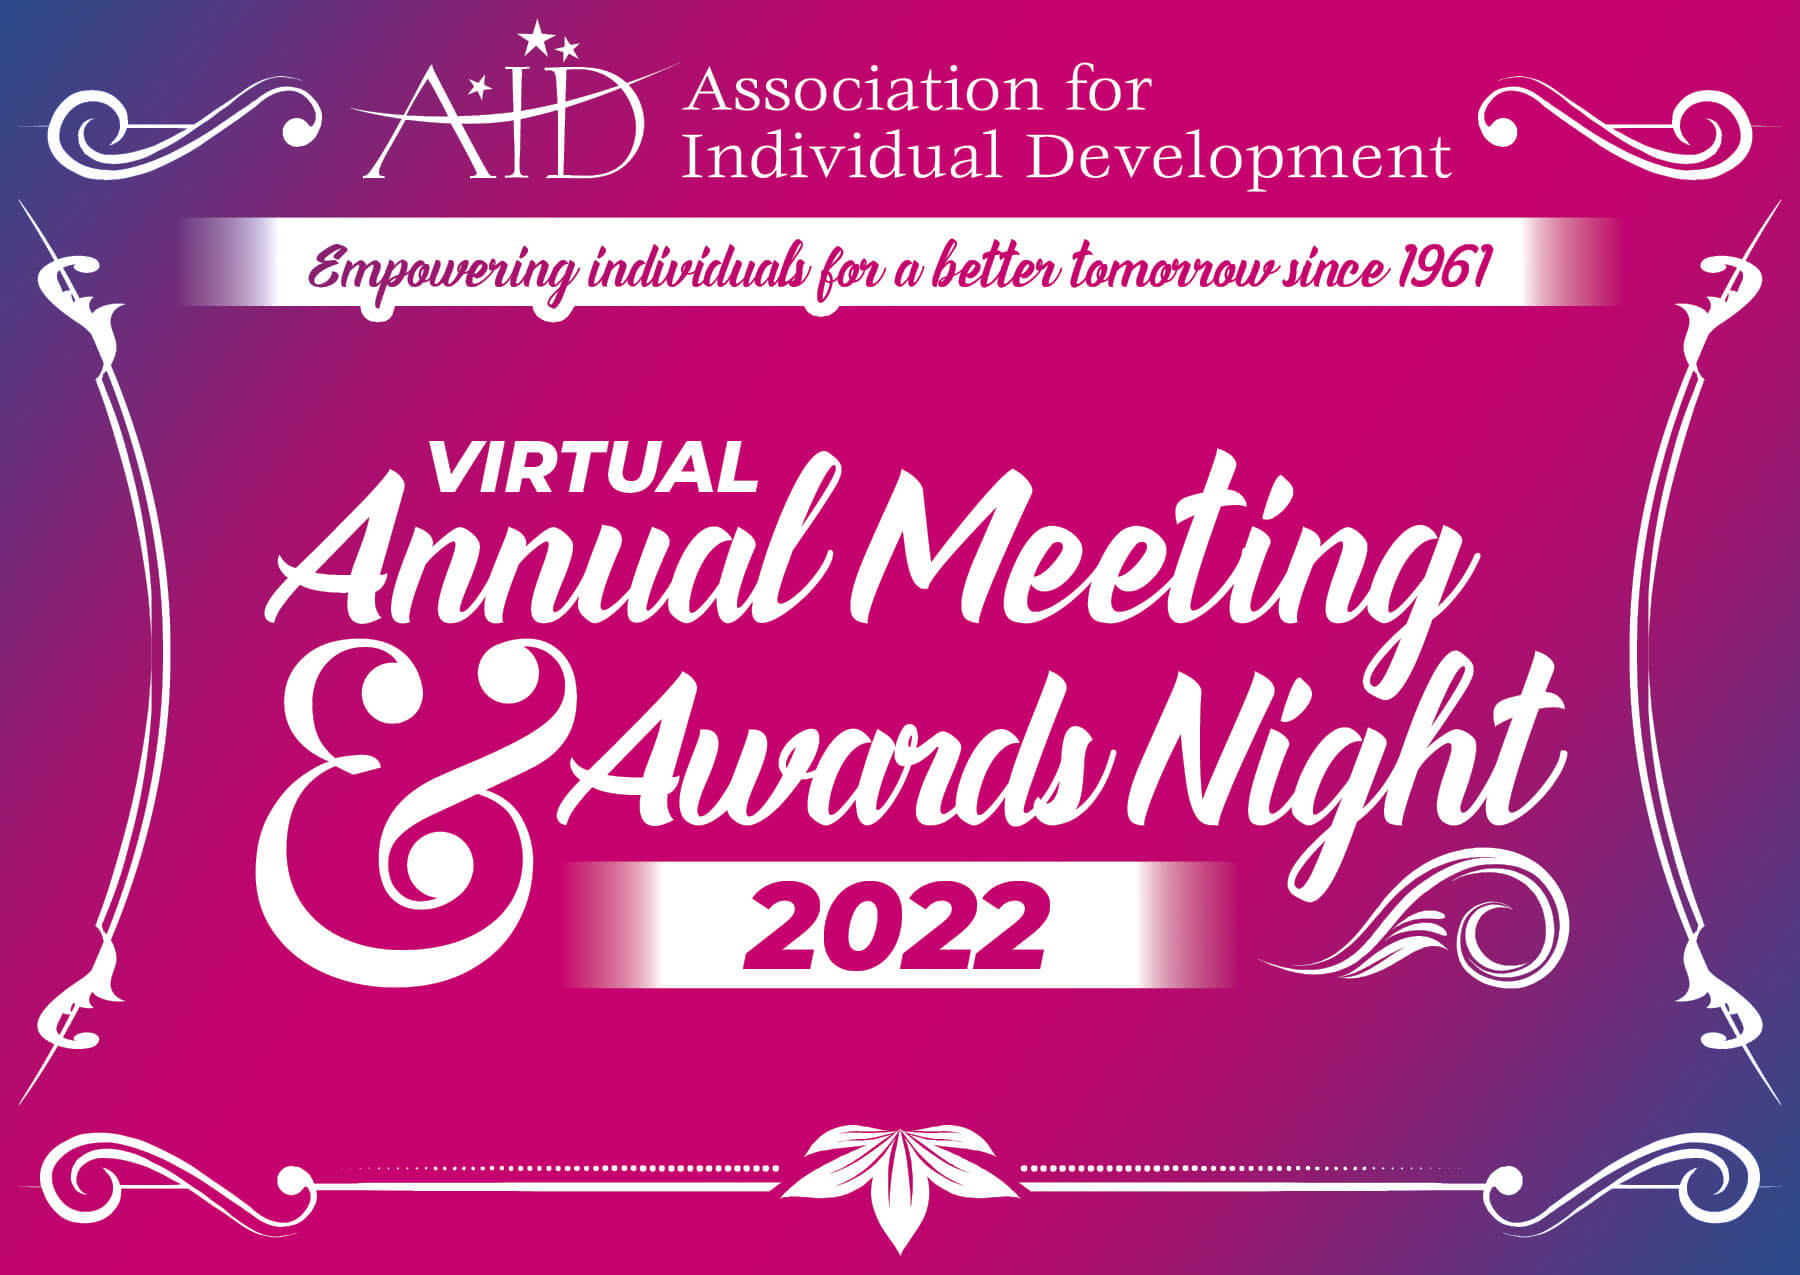 Virtual Annual Meeting Awards Night 2022